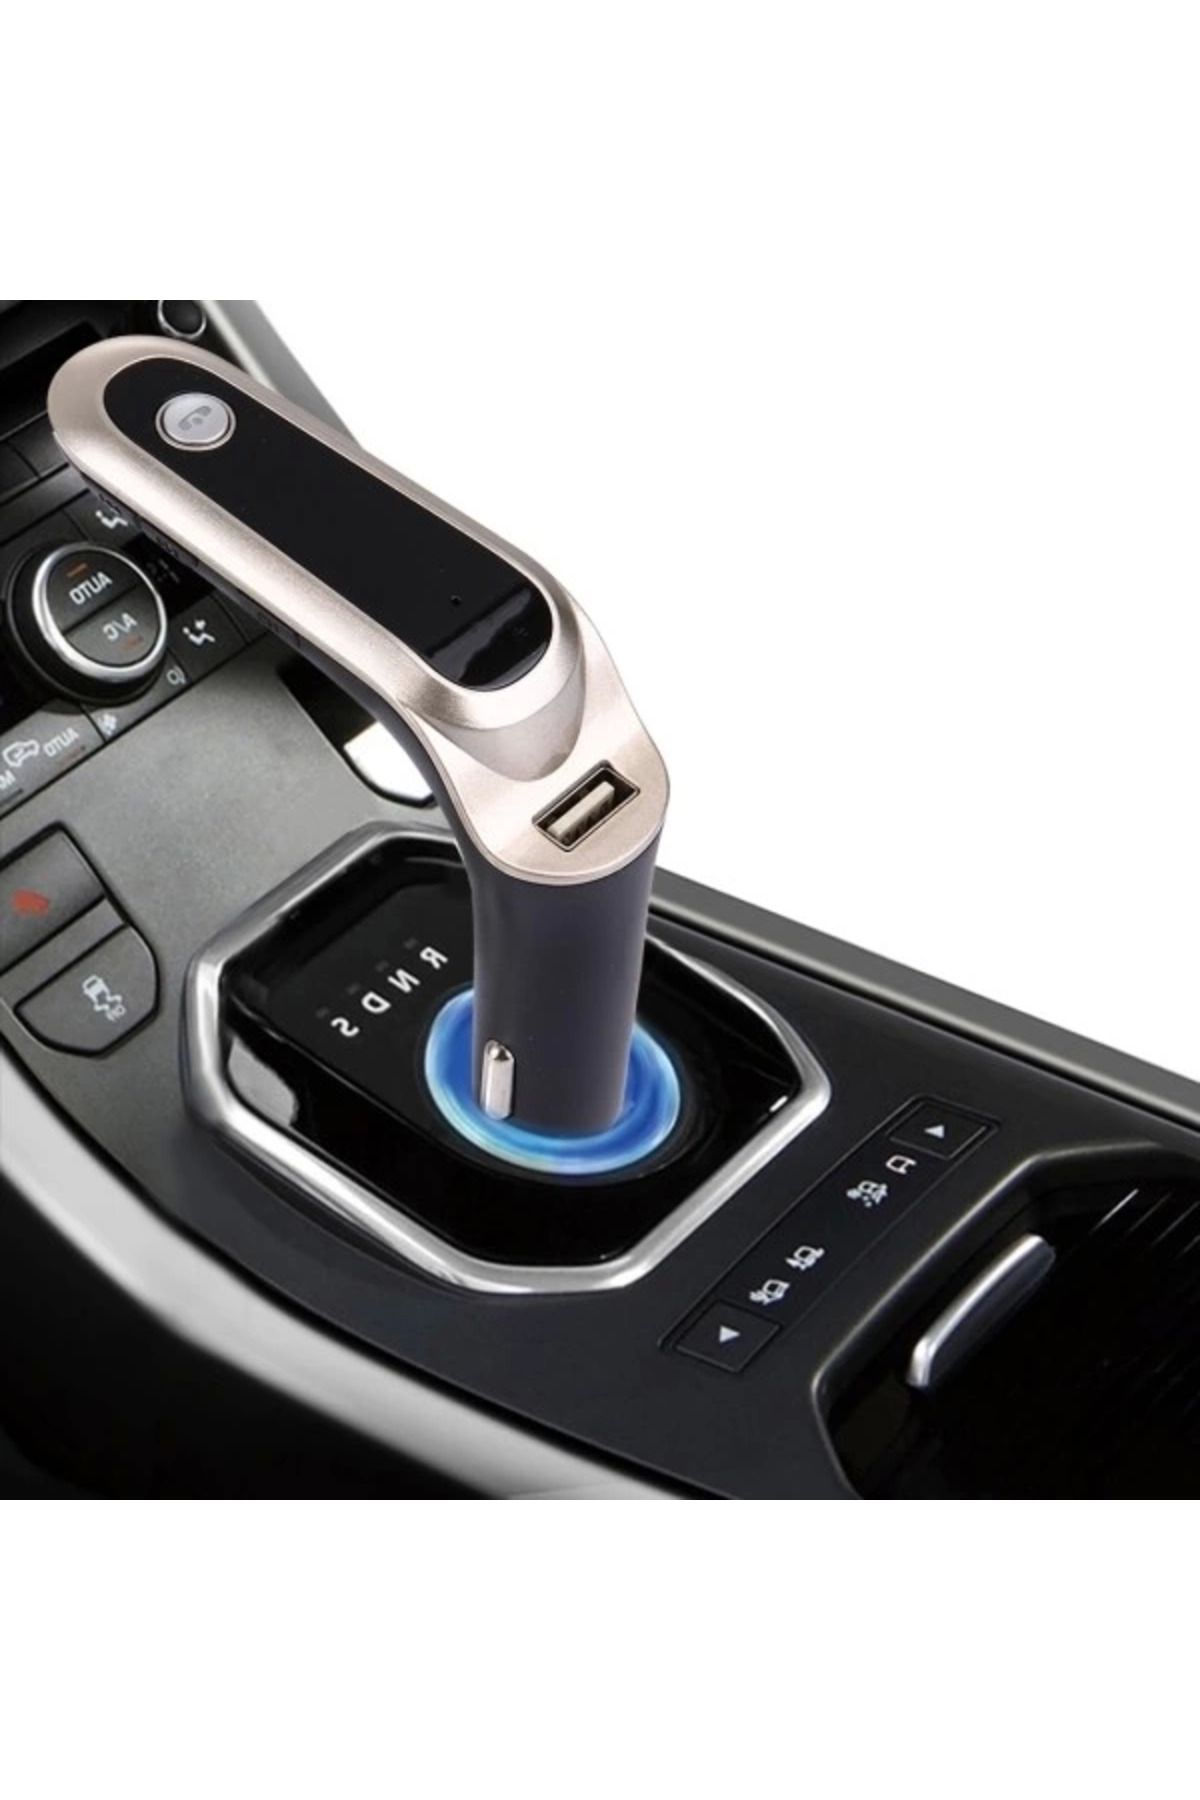 Astra Market Cars7 Bluetooth Hafıza Kart Girişli 4.0 Araç Kiti Çakmaklık Mp3 Fm Transmitter ( Lisinya )